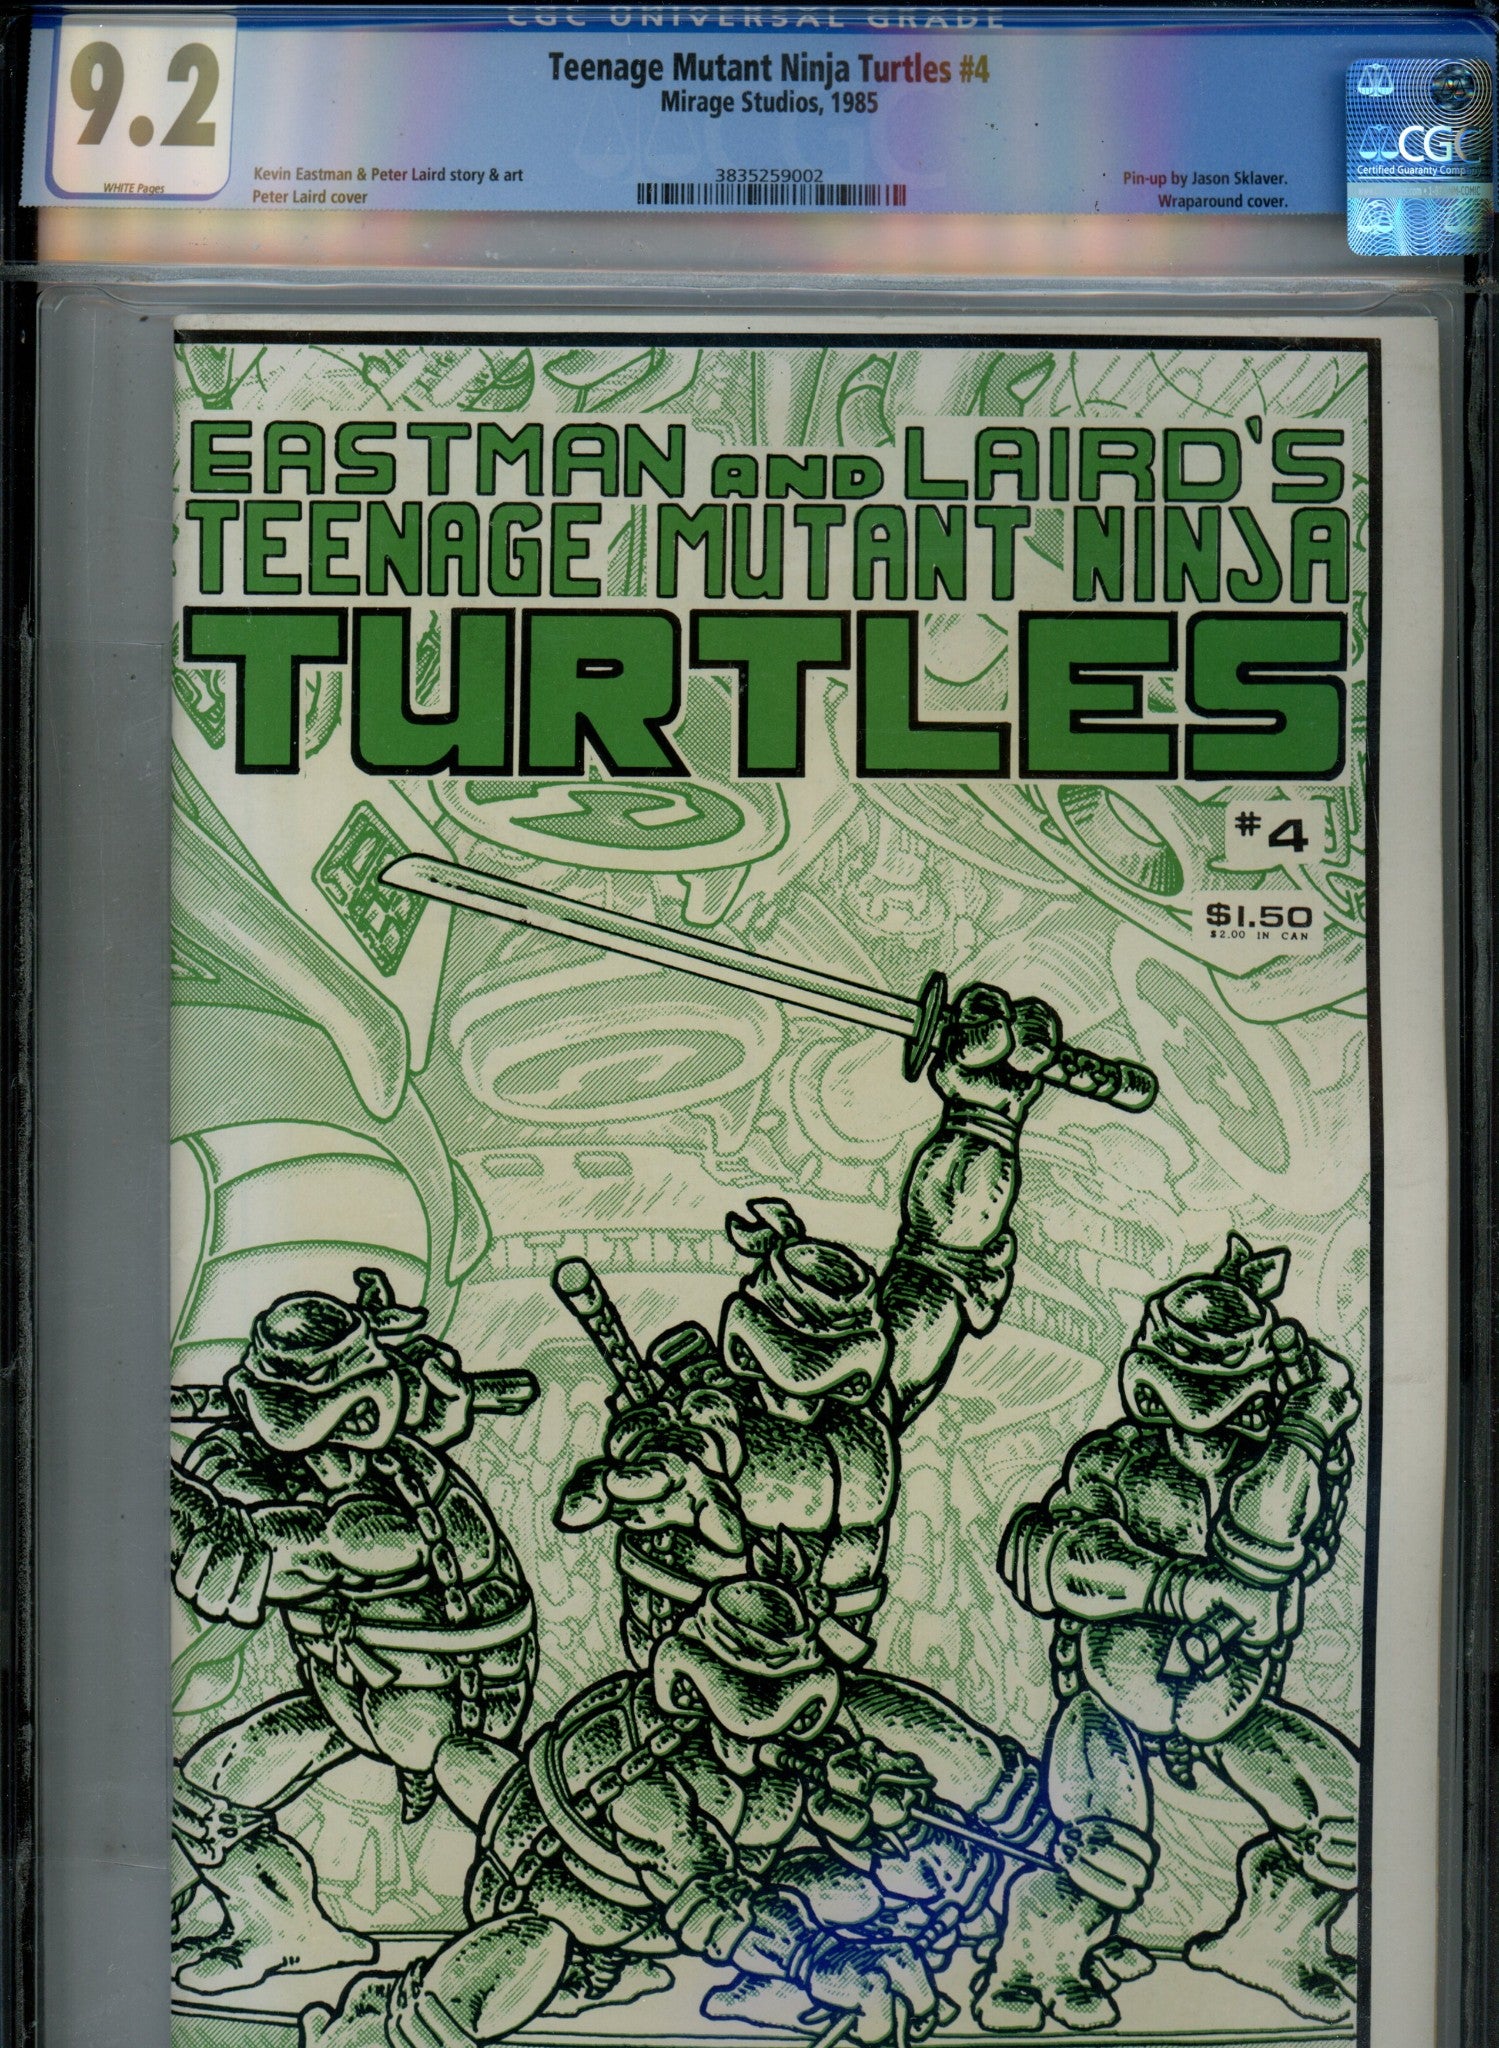 Teenage Mutant Ninja Turtles Vol 1 4 CGC 9.2 (NM-) Cracked Case (1985) 